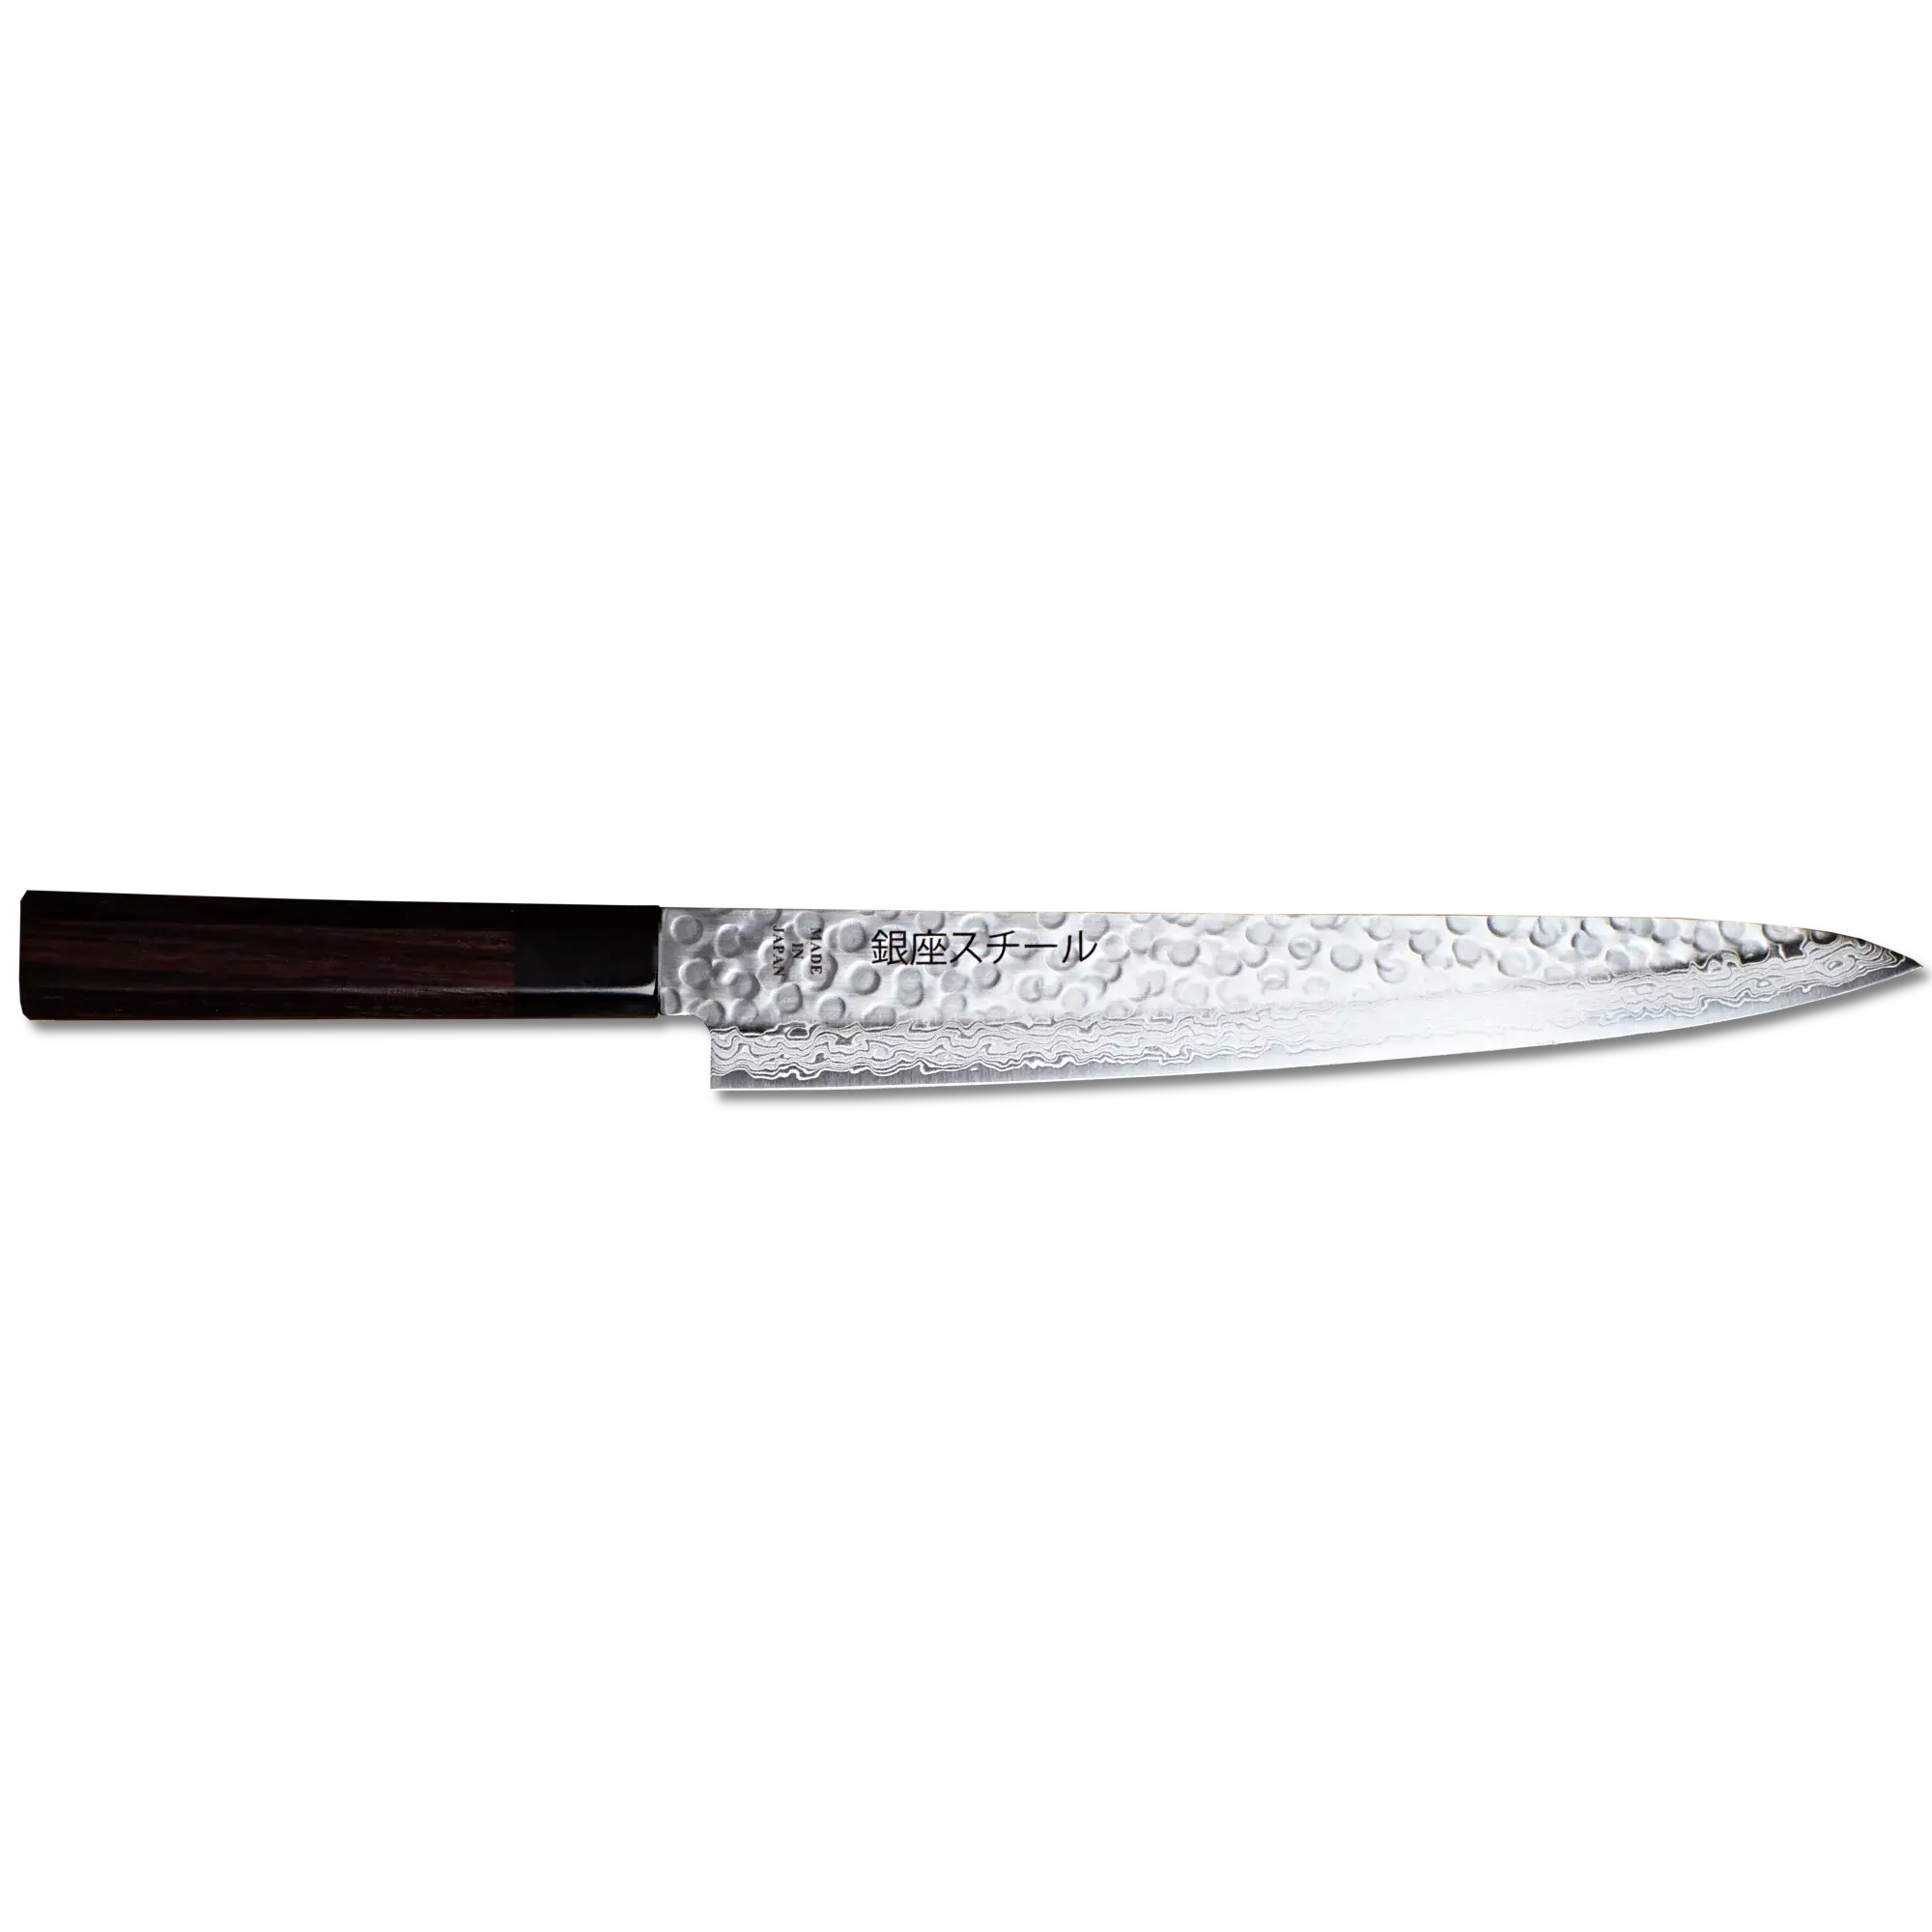 Japanese Sujihiki knife, Japanese sushi knife, best slicer knife, top sujihiki knife